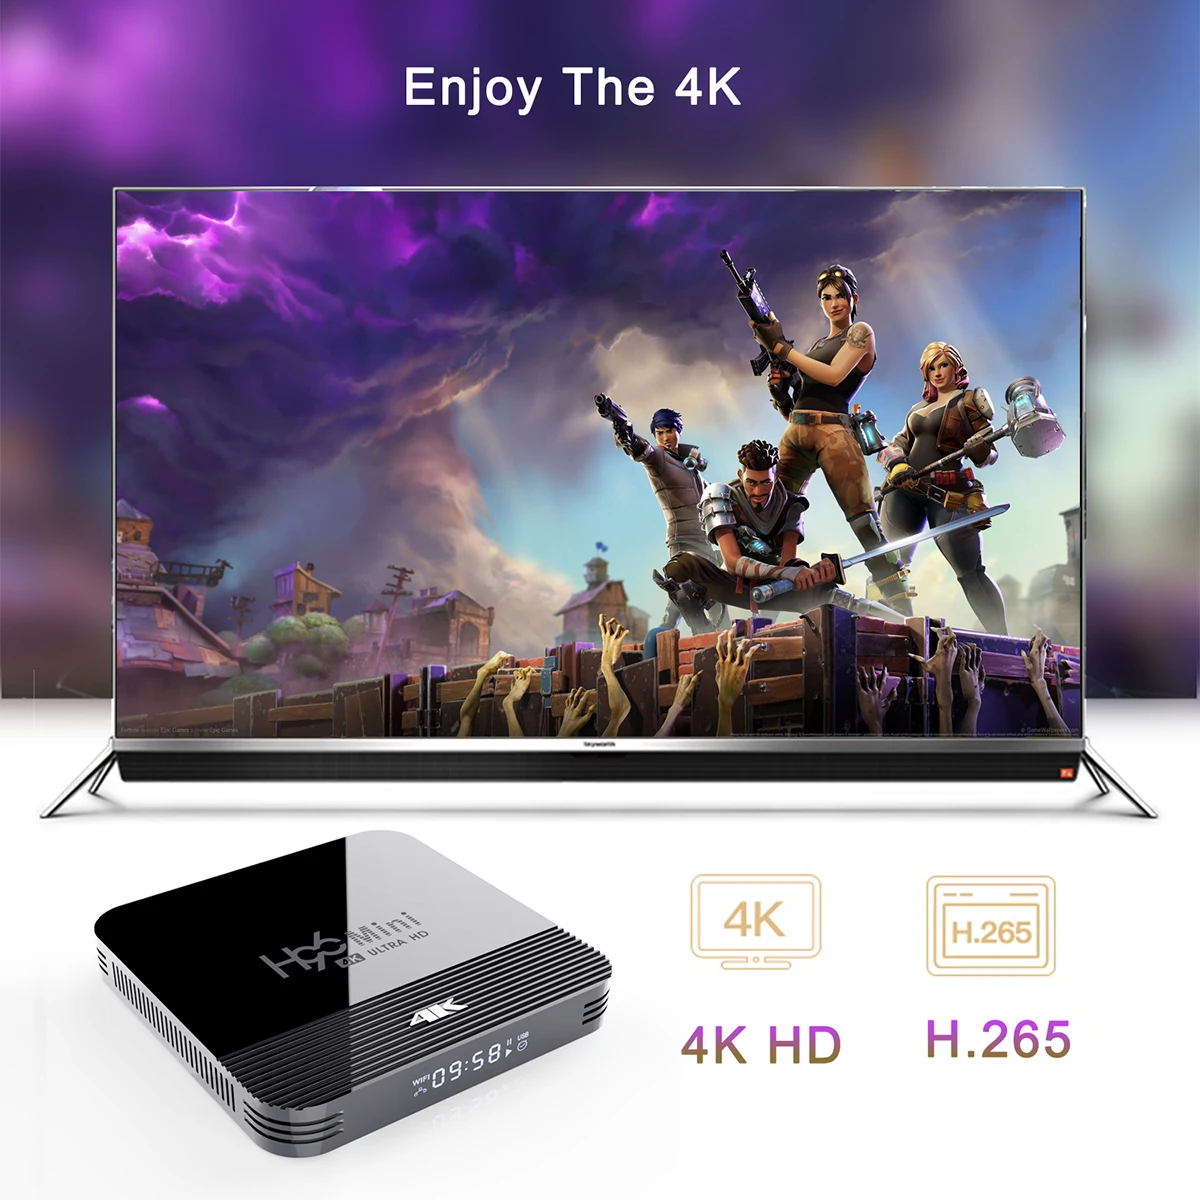 SOONHUA H96 мини RK3228A ТВ коробка 2,4G/5G, Wi-Fi, BT 4,0 set top tv Box 4K HD H.256 USB 2,0 для Google Netflix плеер для Android 9,0